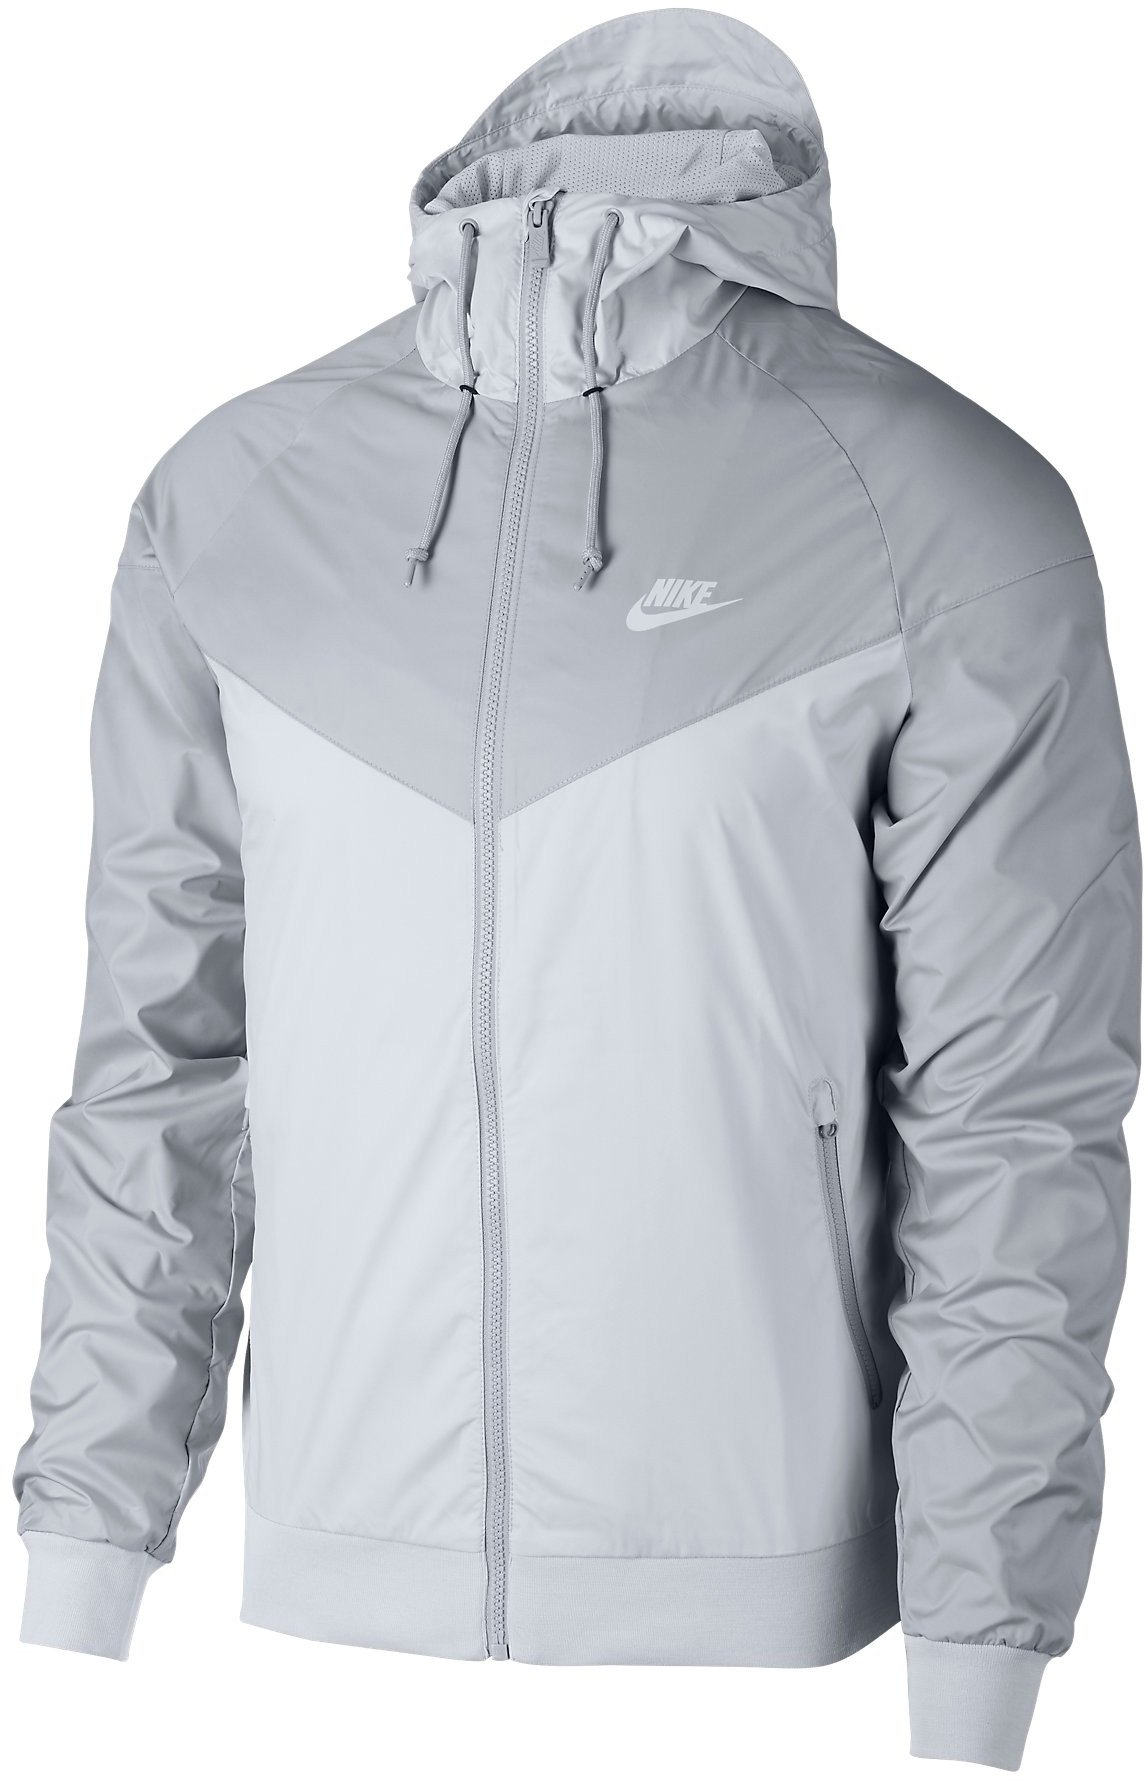 Hooded jacket Nike M NSW WR JKT - Top4Running.com